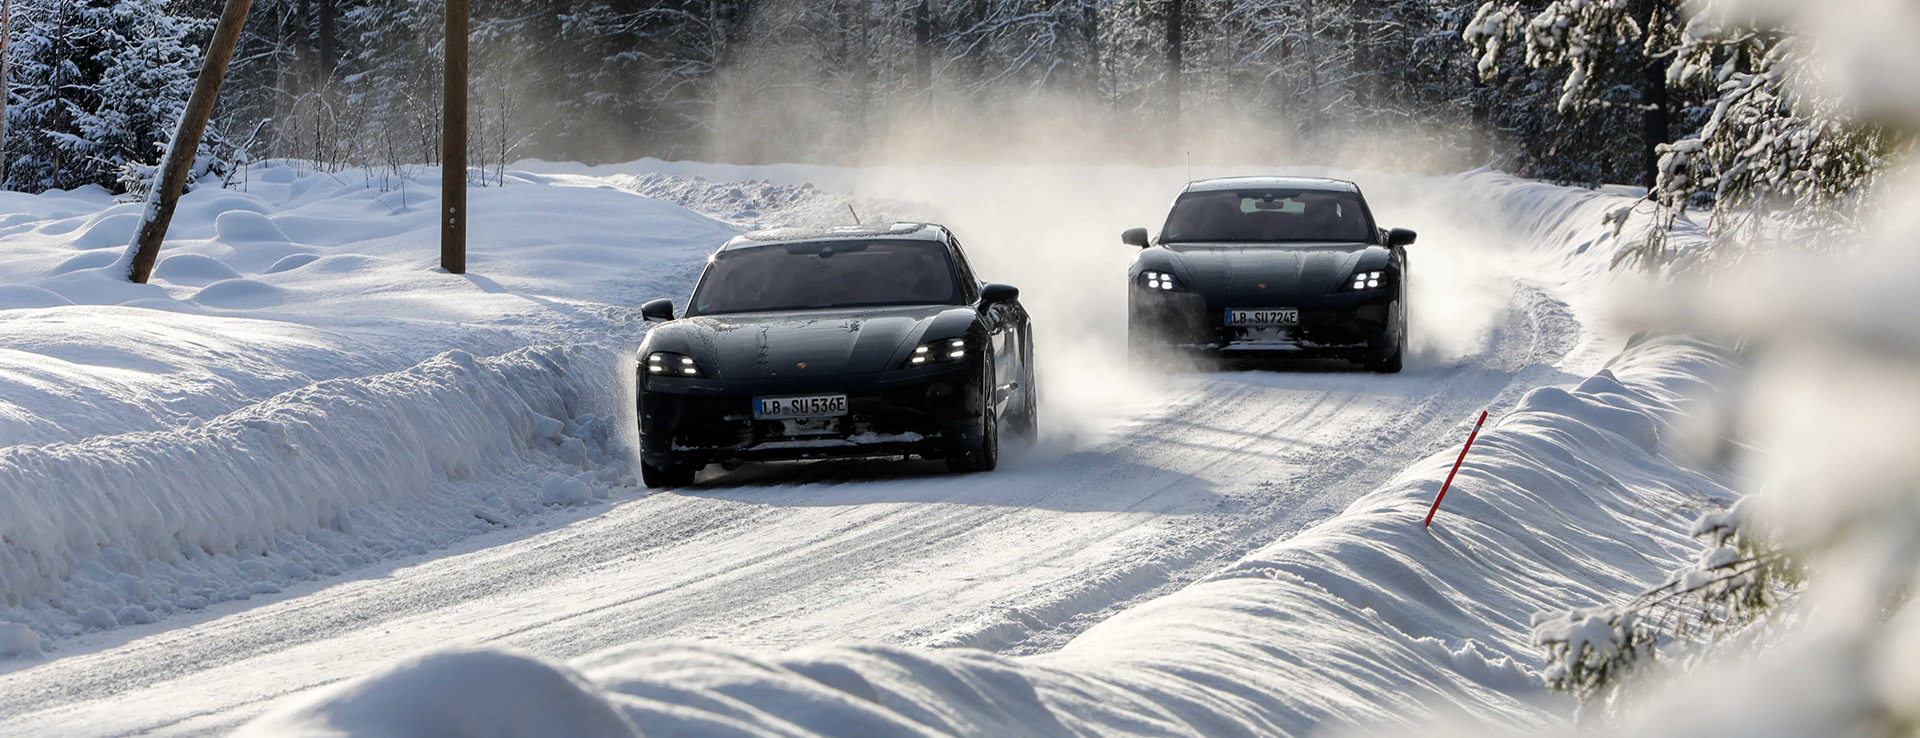 Two black Porsche Taycan cars in snow